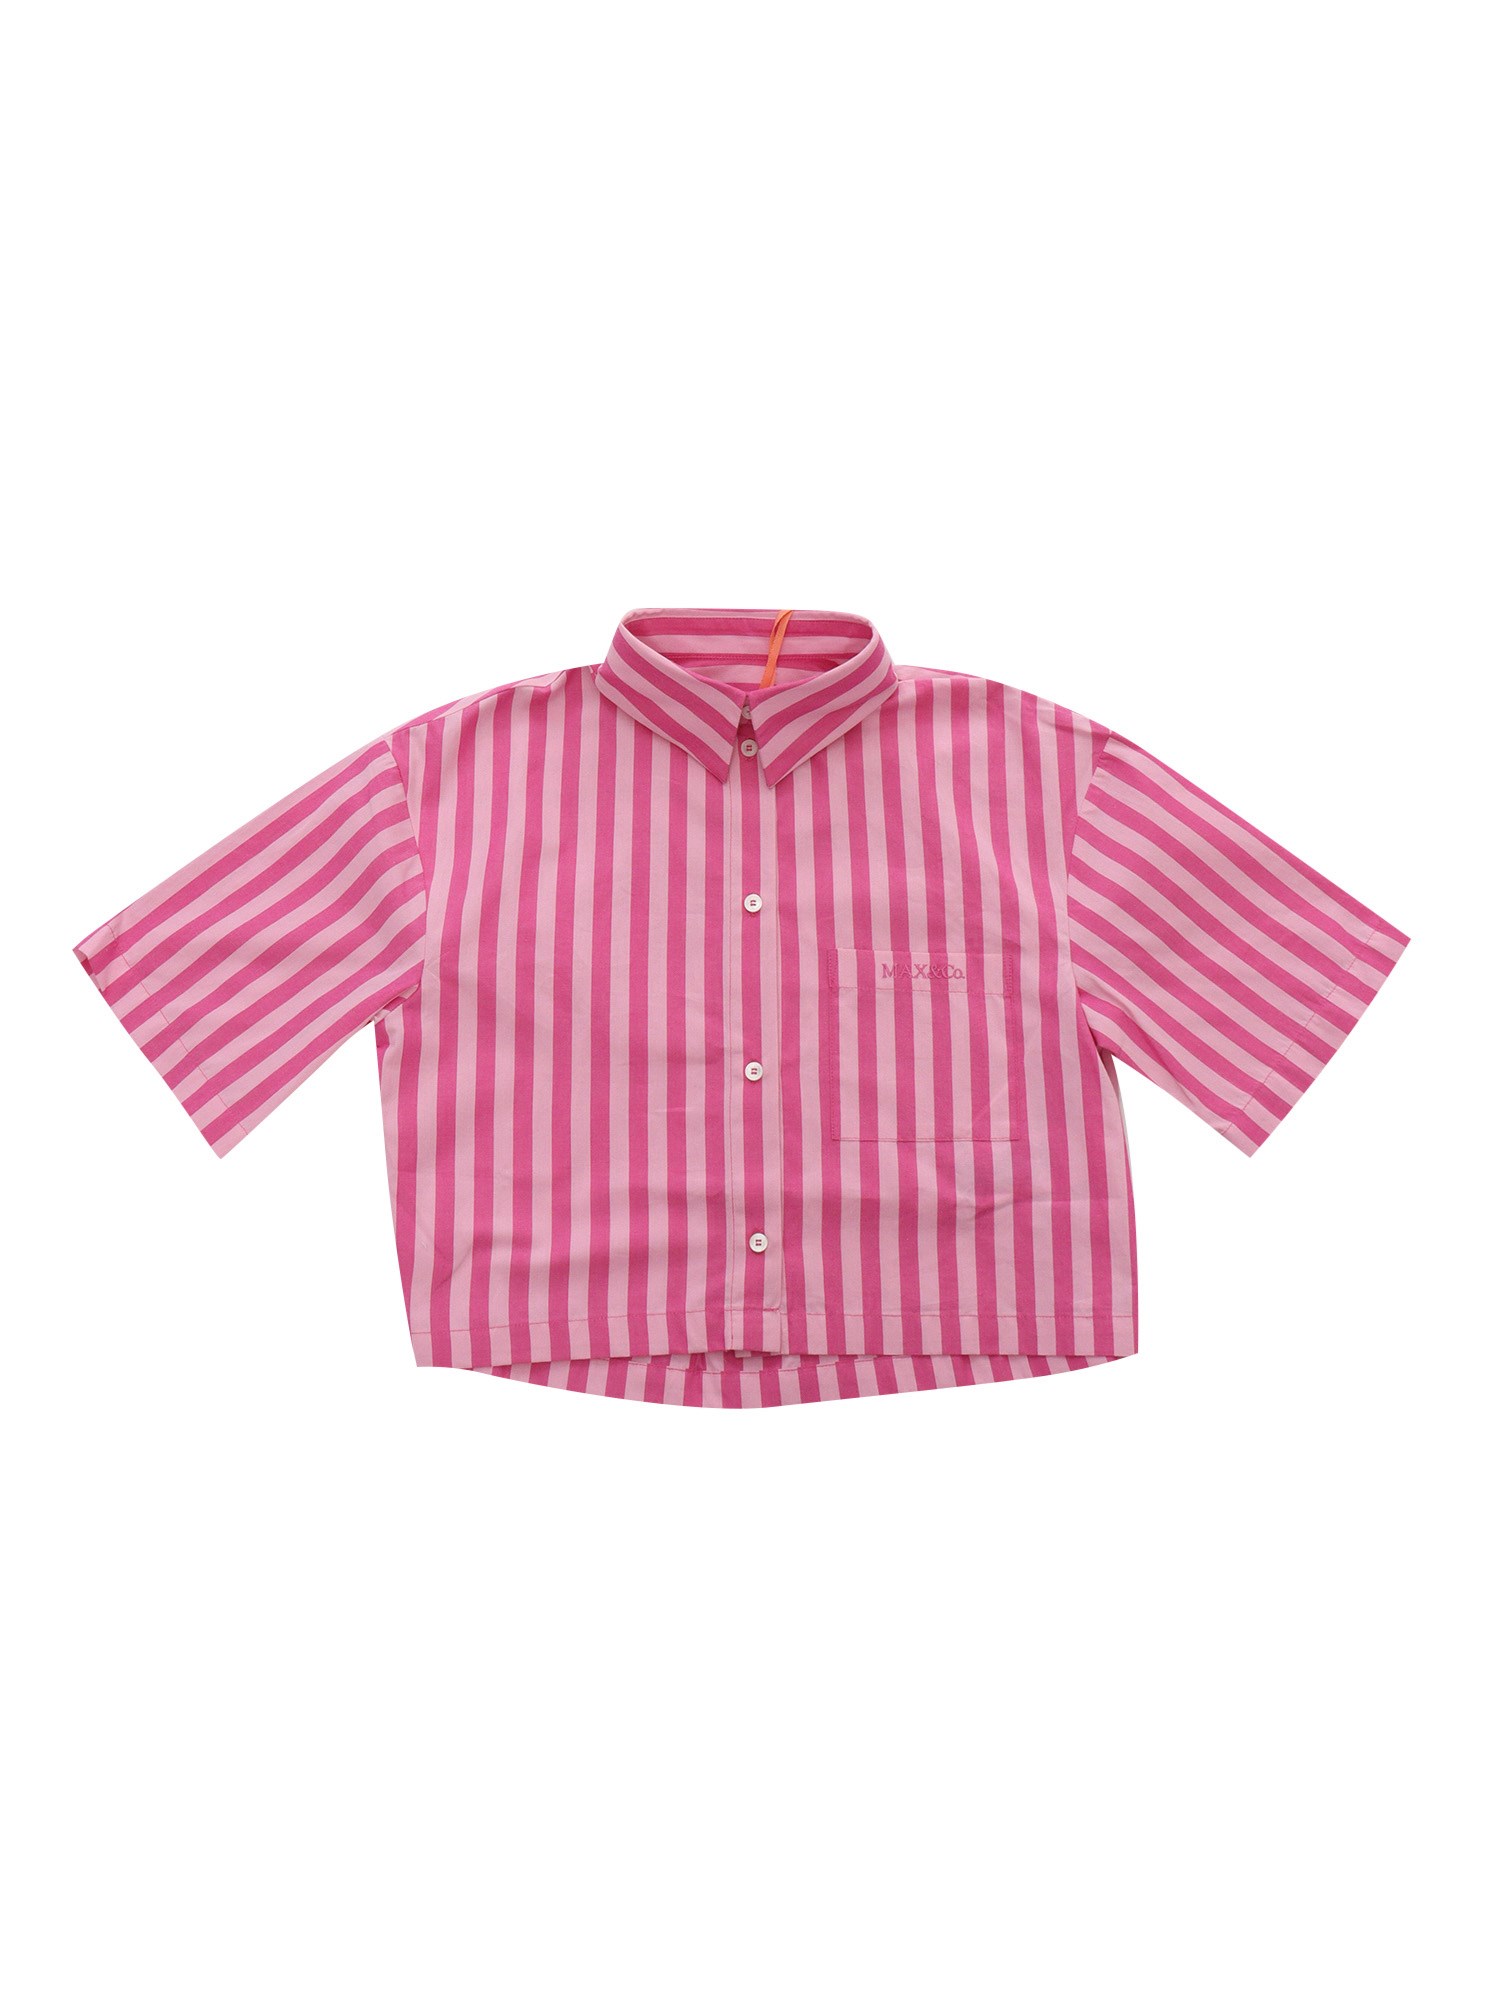 Max & Co Pink Striped Shirt